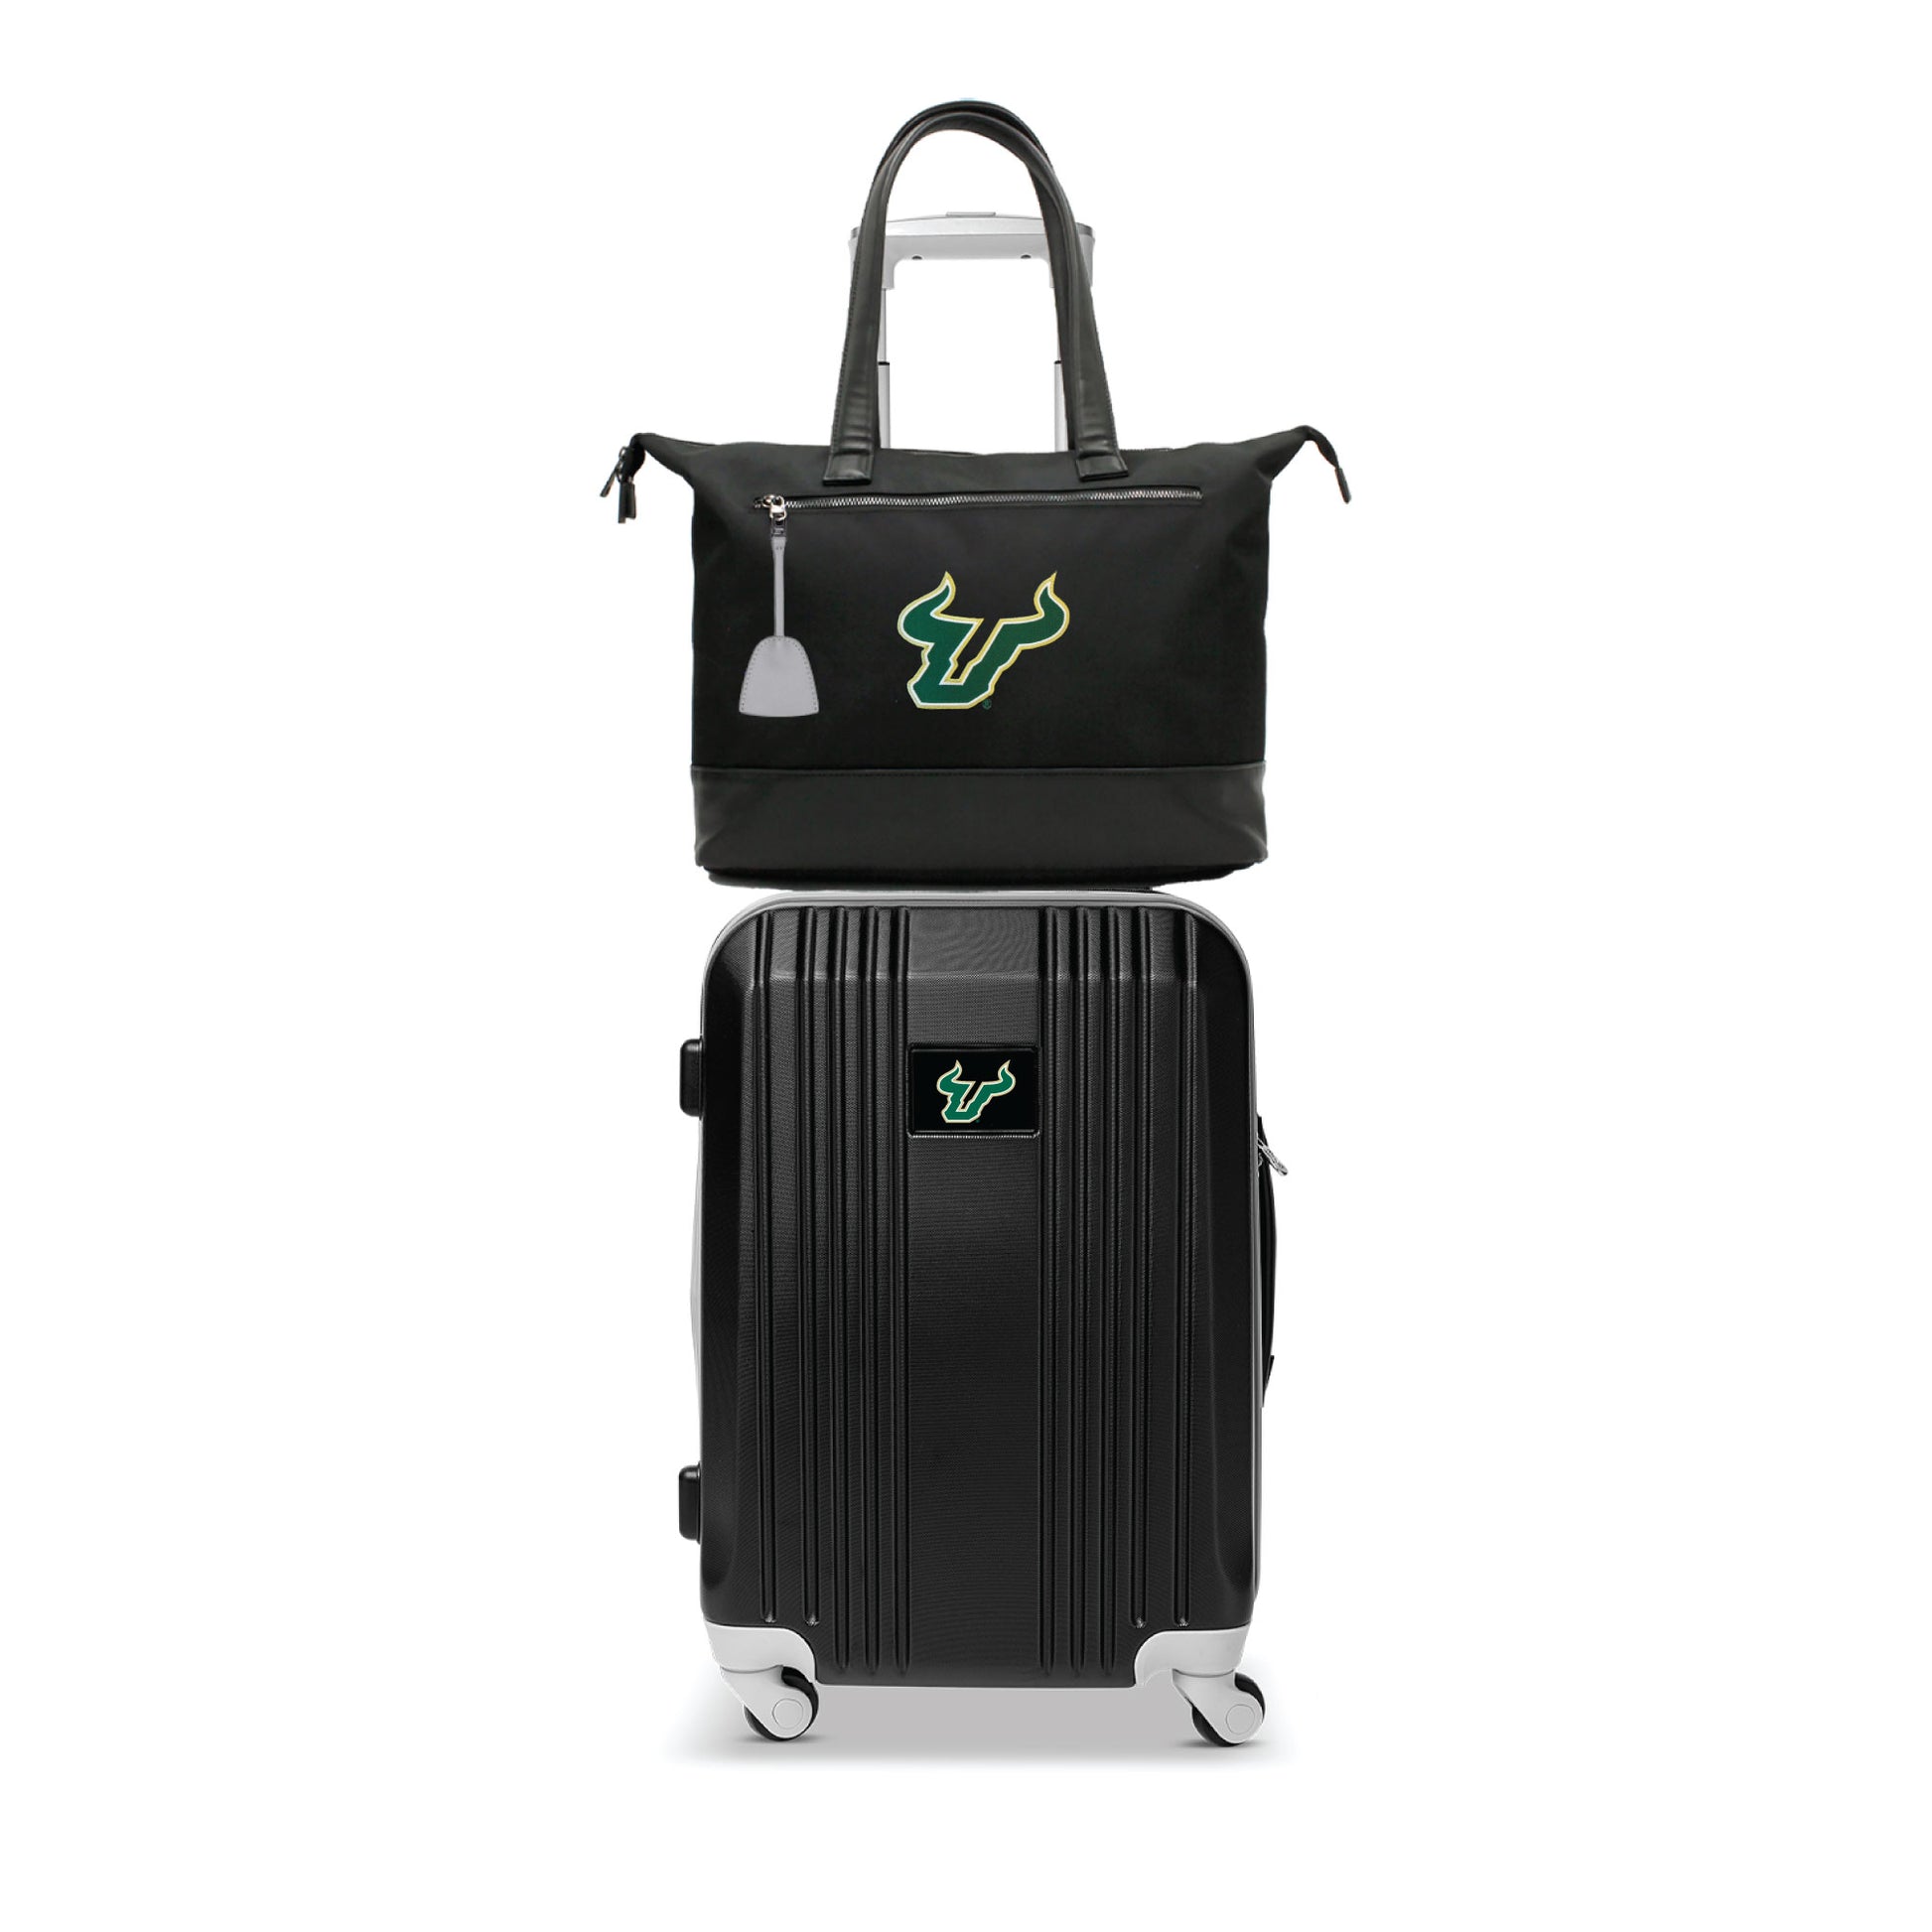 South Florida Bulls Premium Laptop Tote Bag and Luggage Set